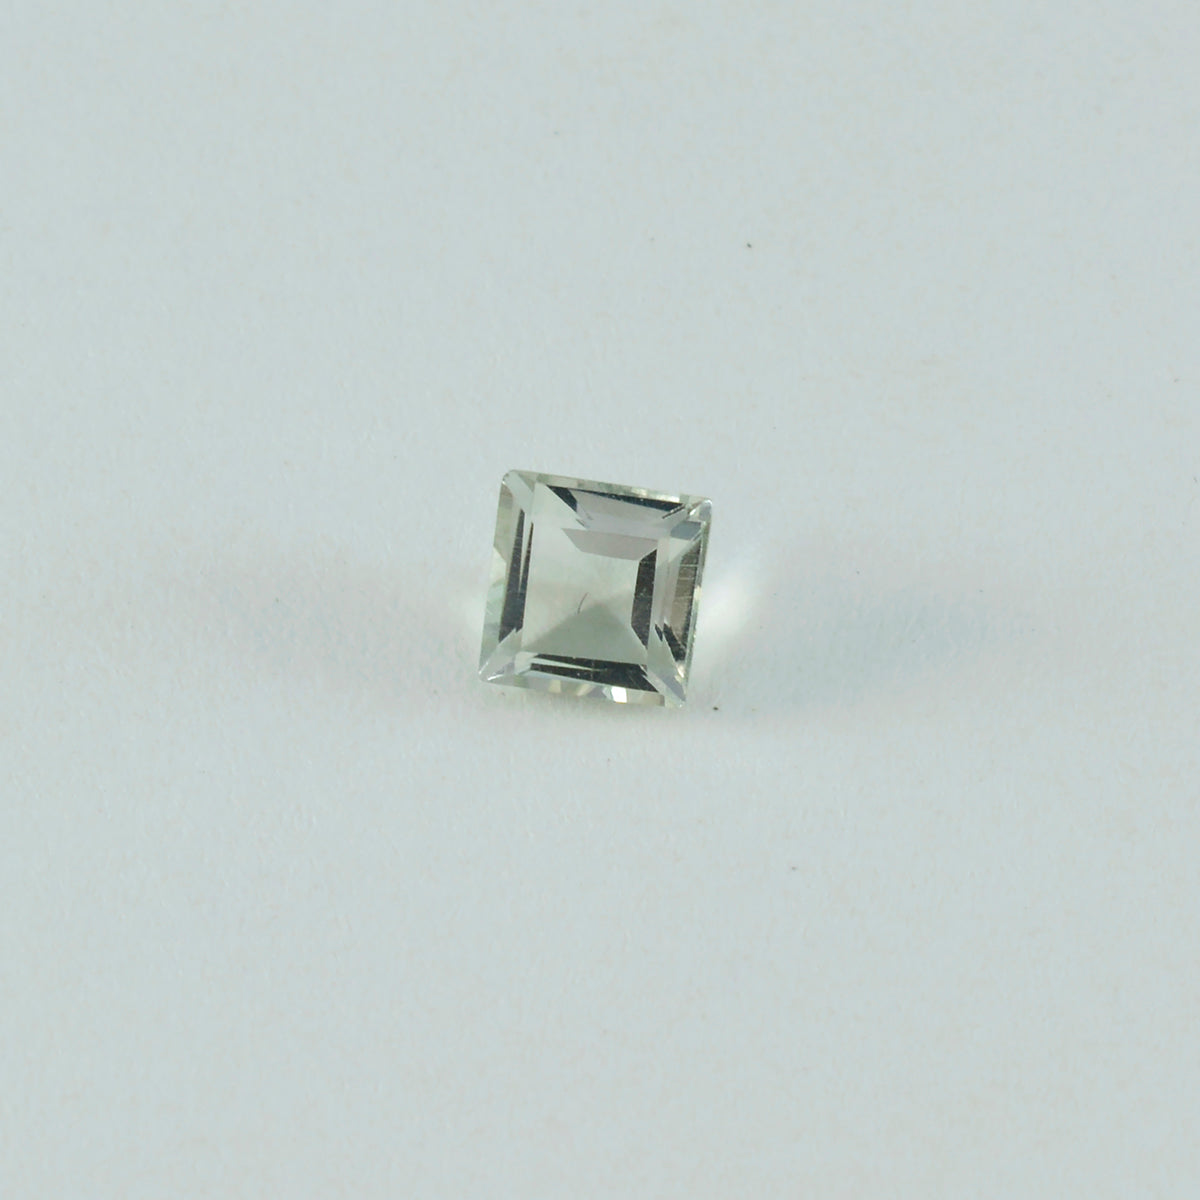 riyogems 1pc グリーン アメジスト ファセット 11x11 mm 正方形の形状 AA 品質ルース宝石